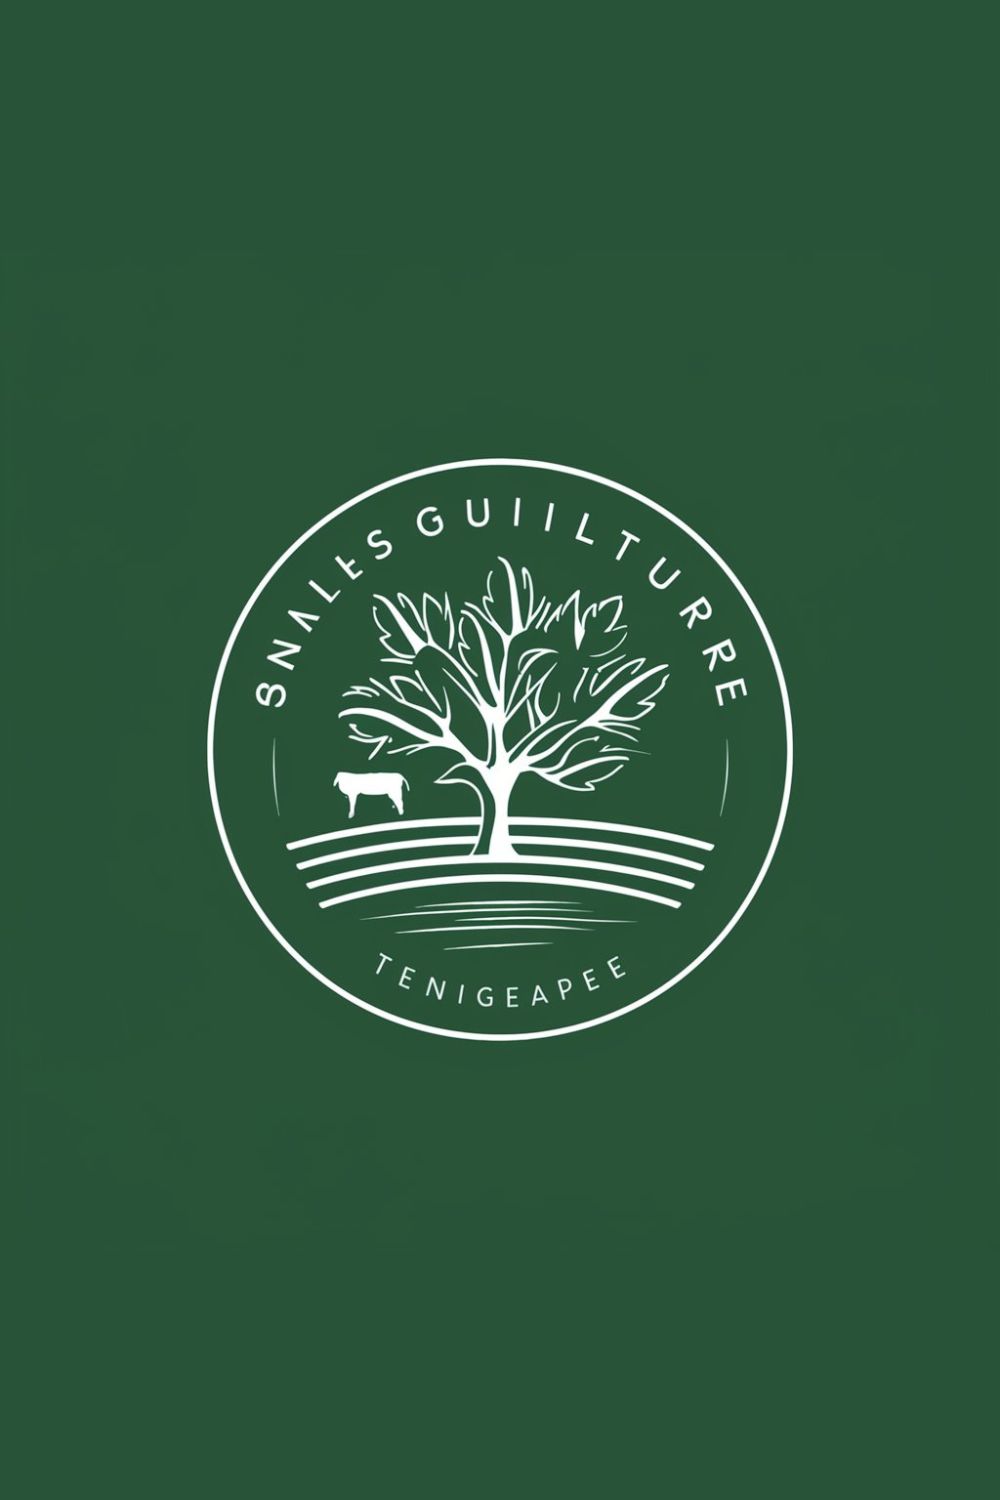 Agriculture Logo Design pinterest preview image.